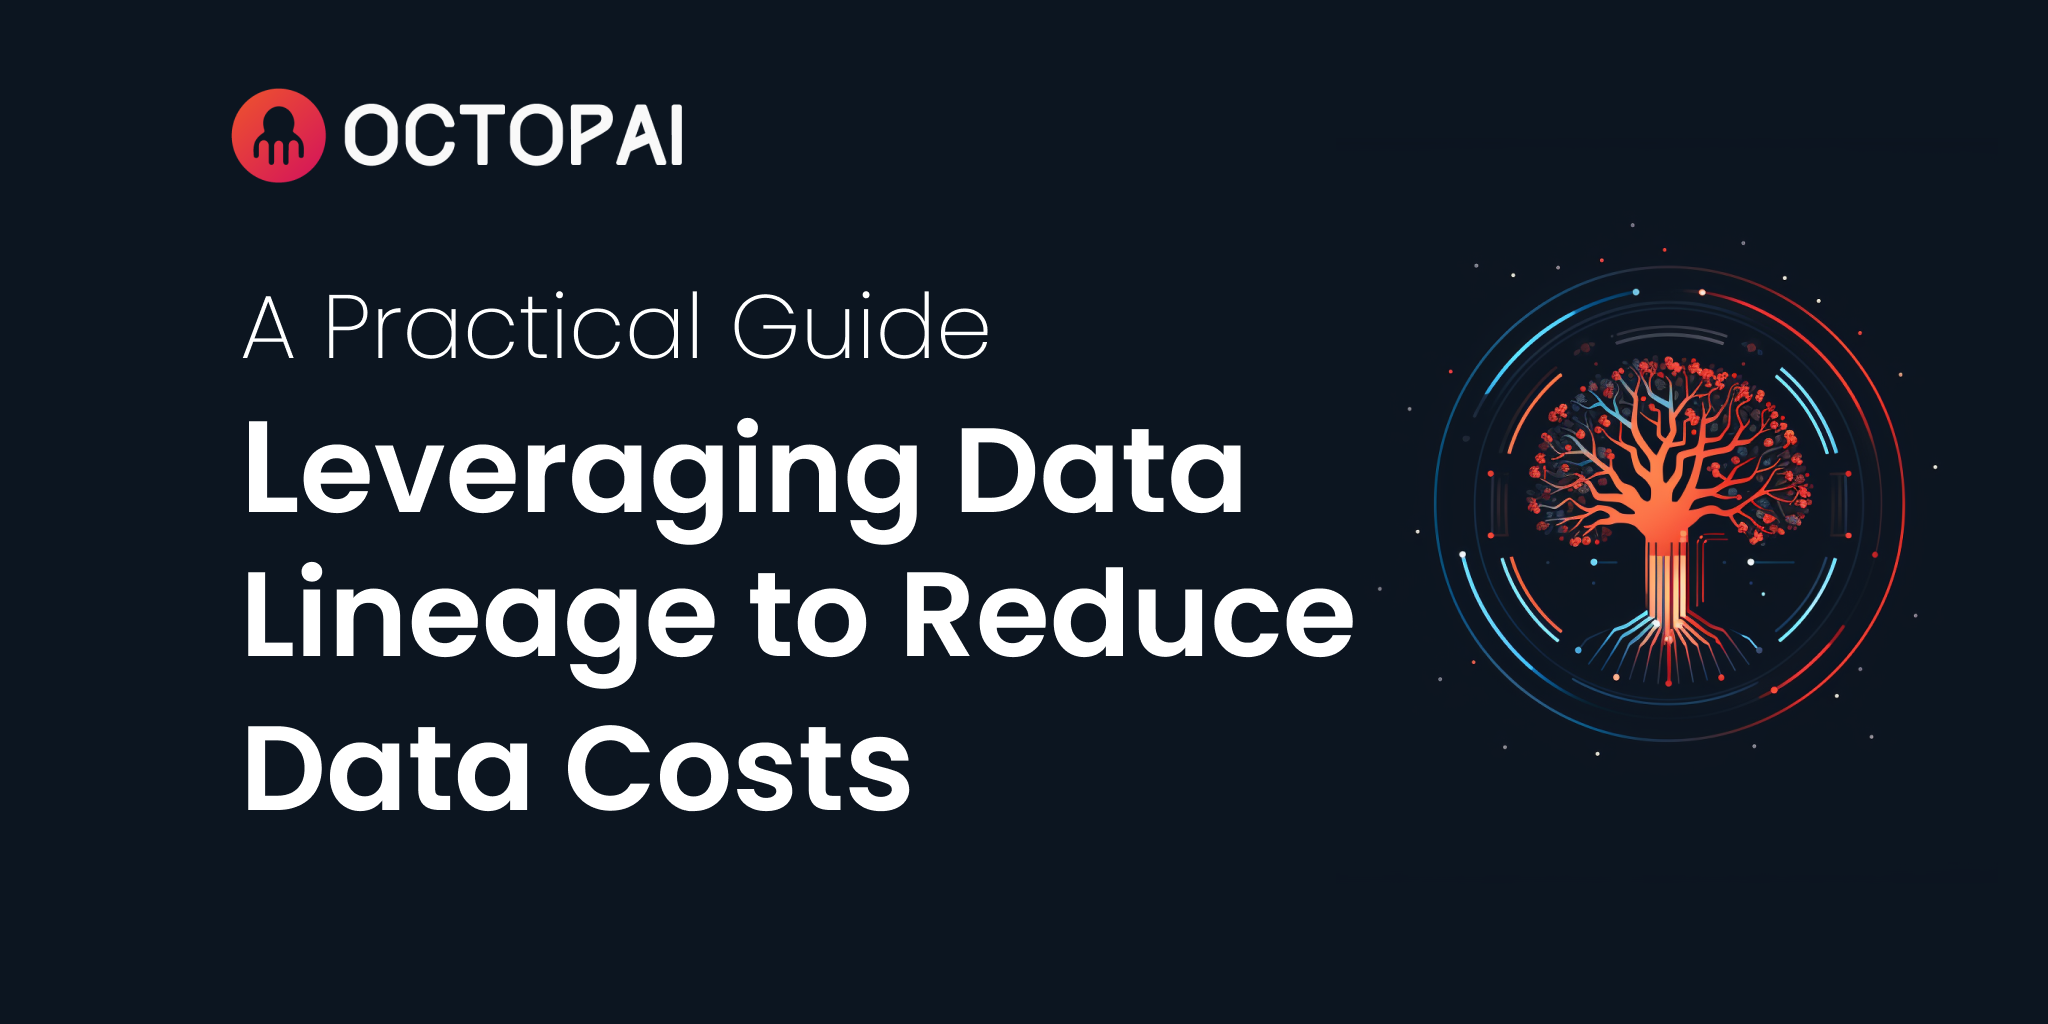 Reduce Data Costs